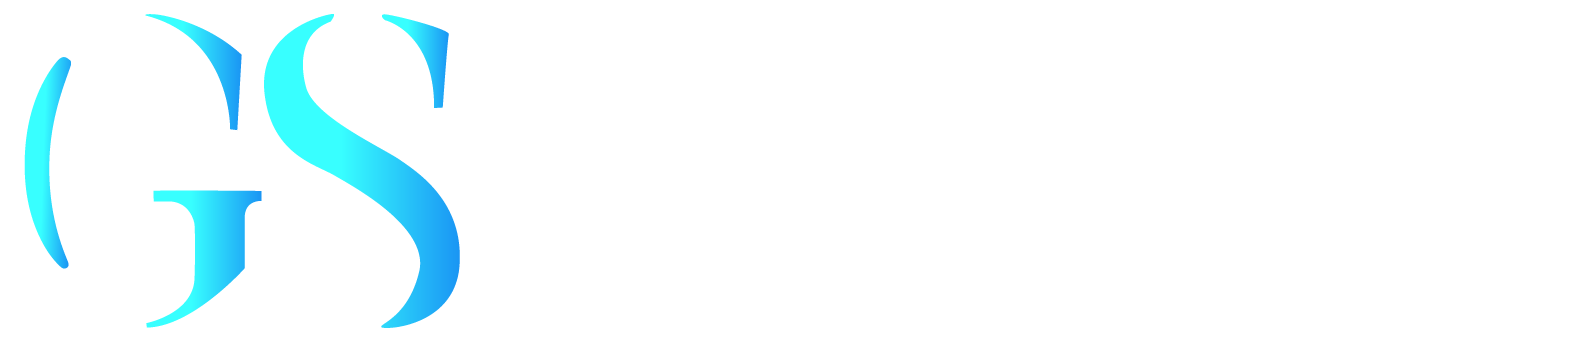 Guadalupe Soria